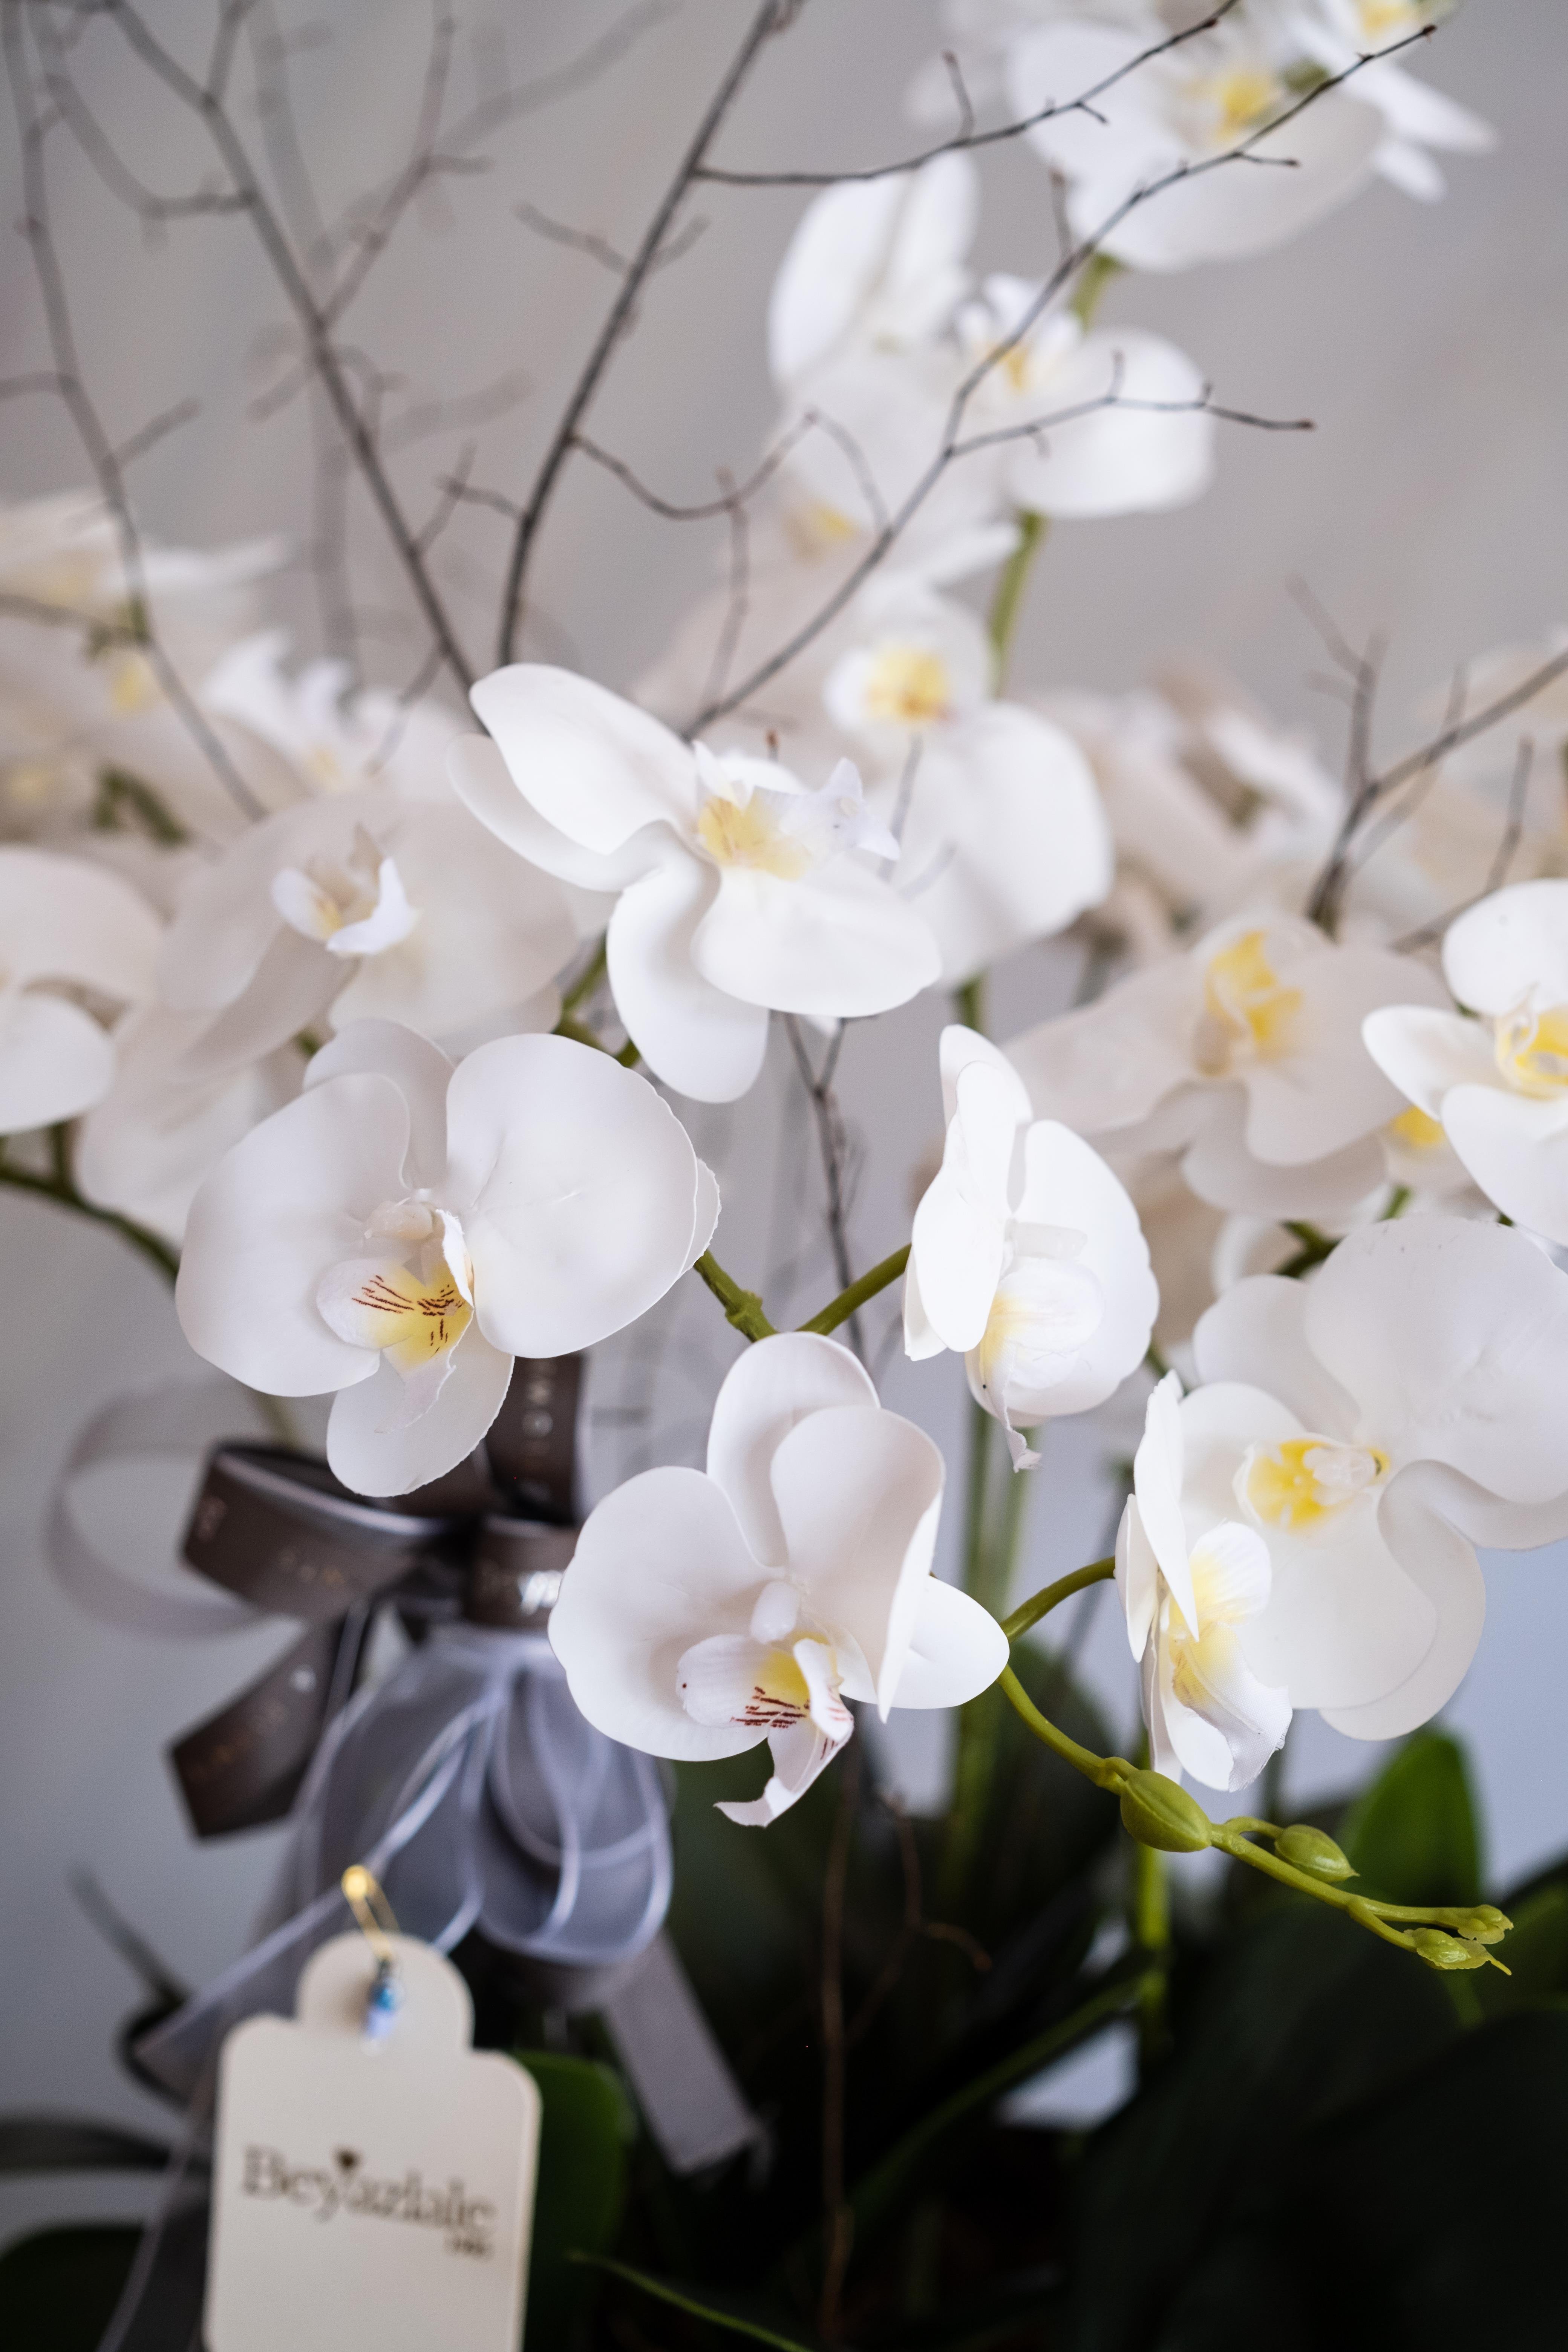 Yapay Orkide Dalı Benekli Beyaz 100 cm